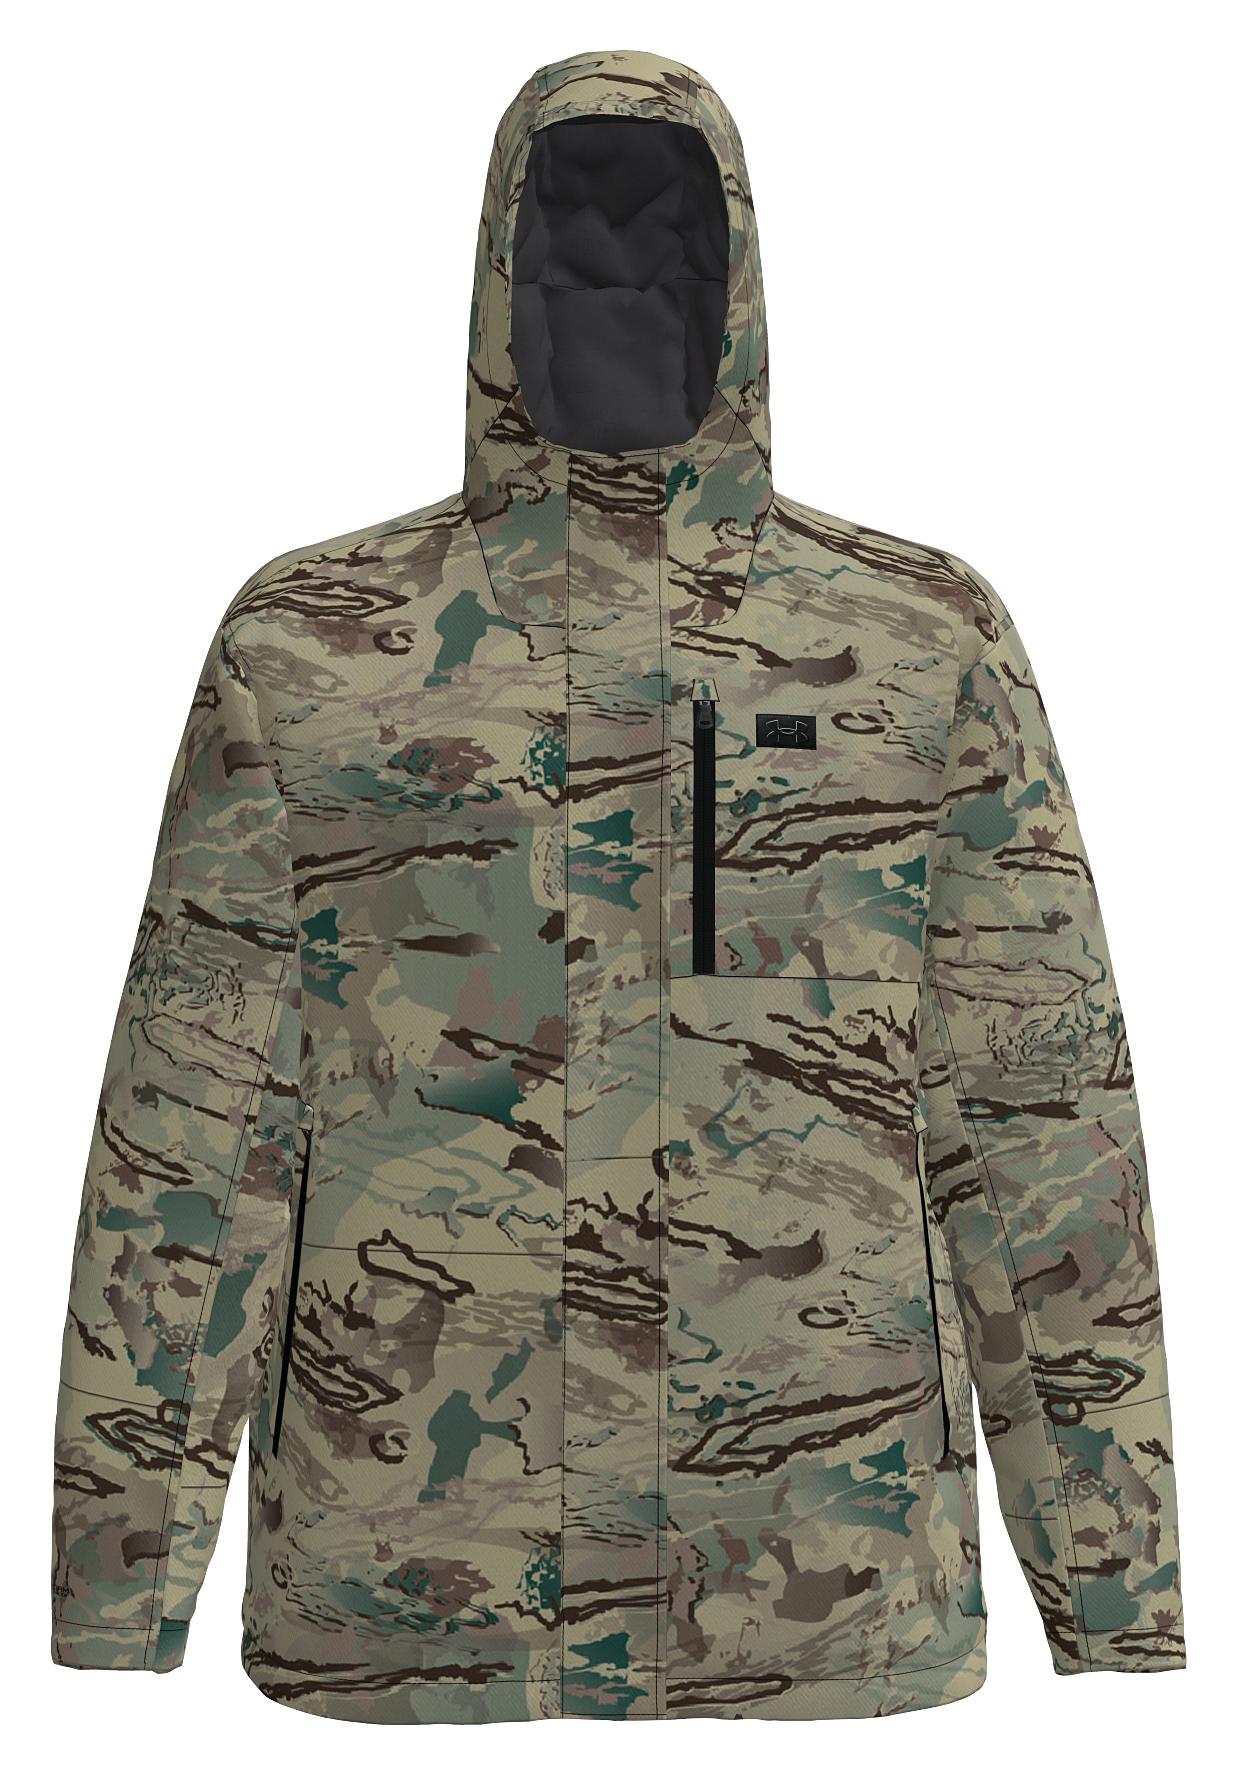 Under Armour UA Storm ColdGear Infrared Whitepine Jacket - Men's